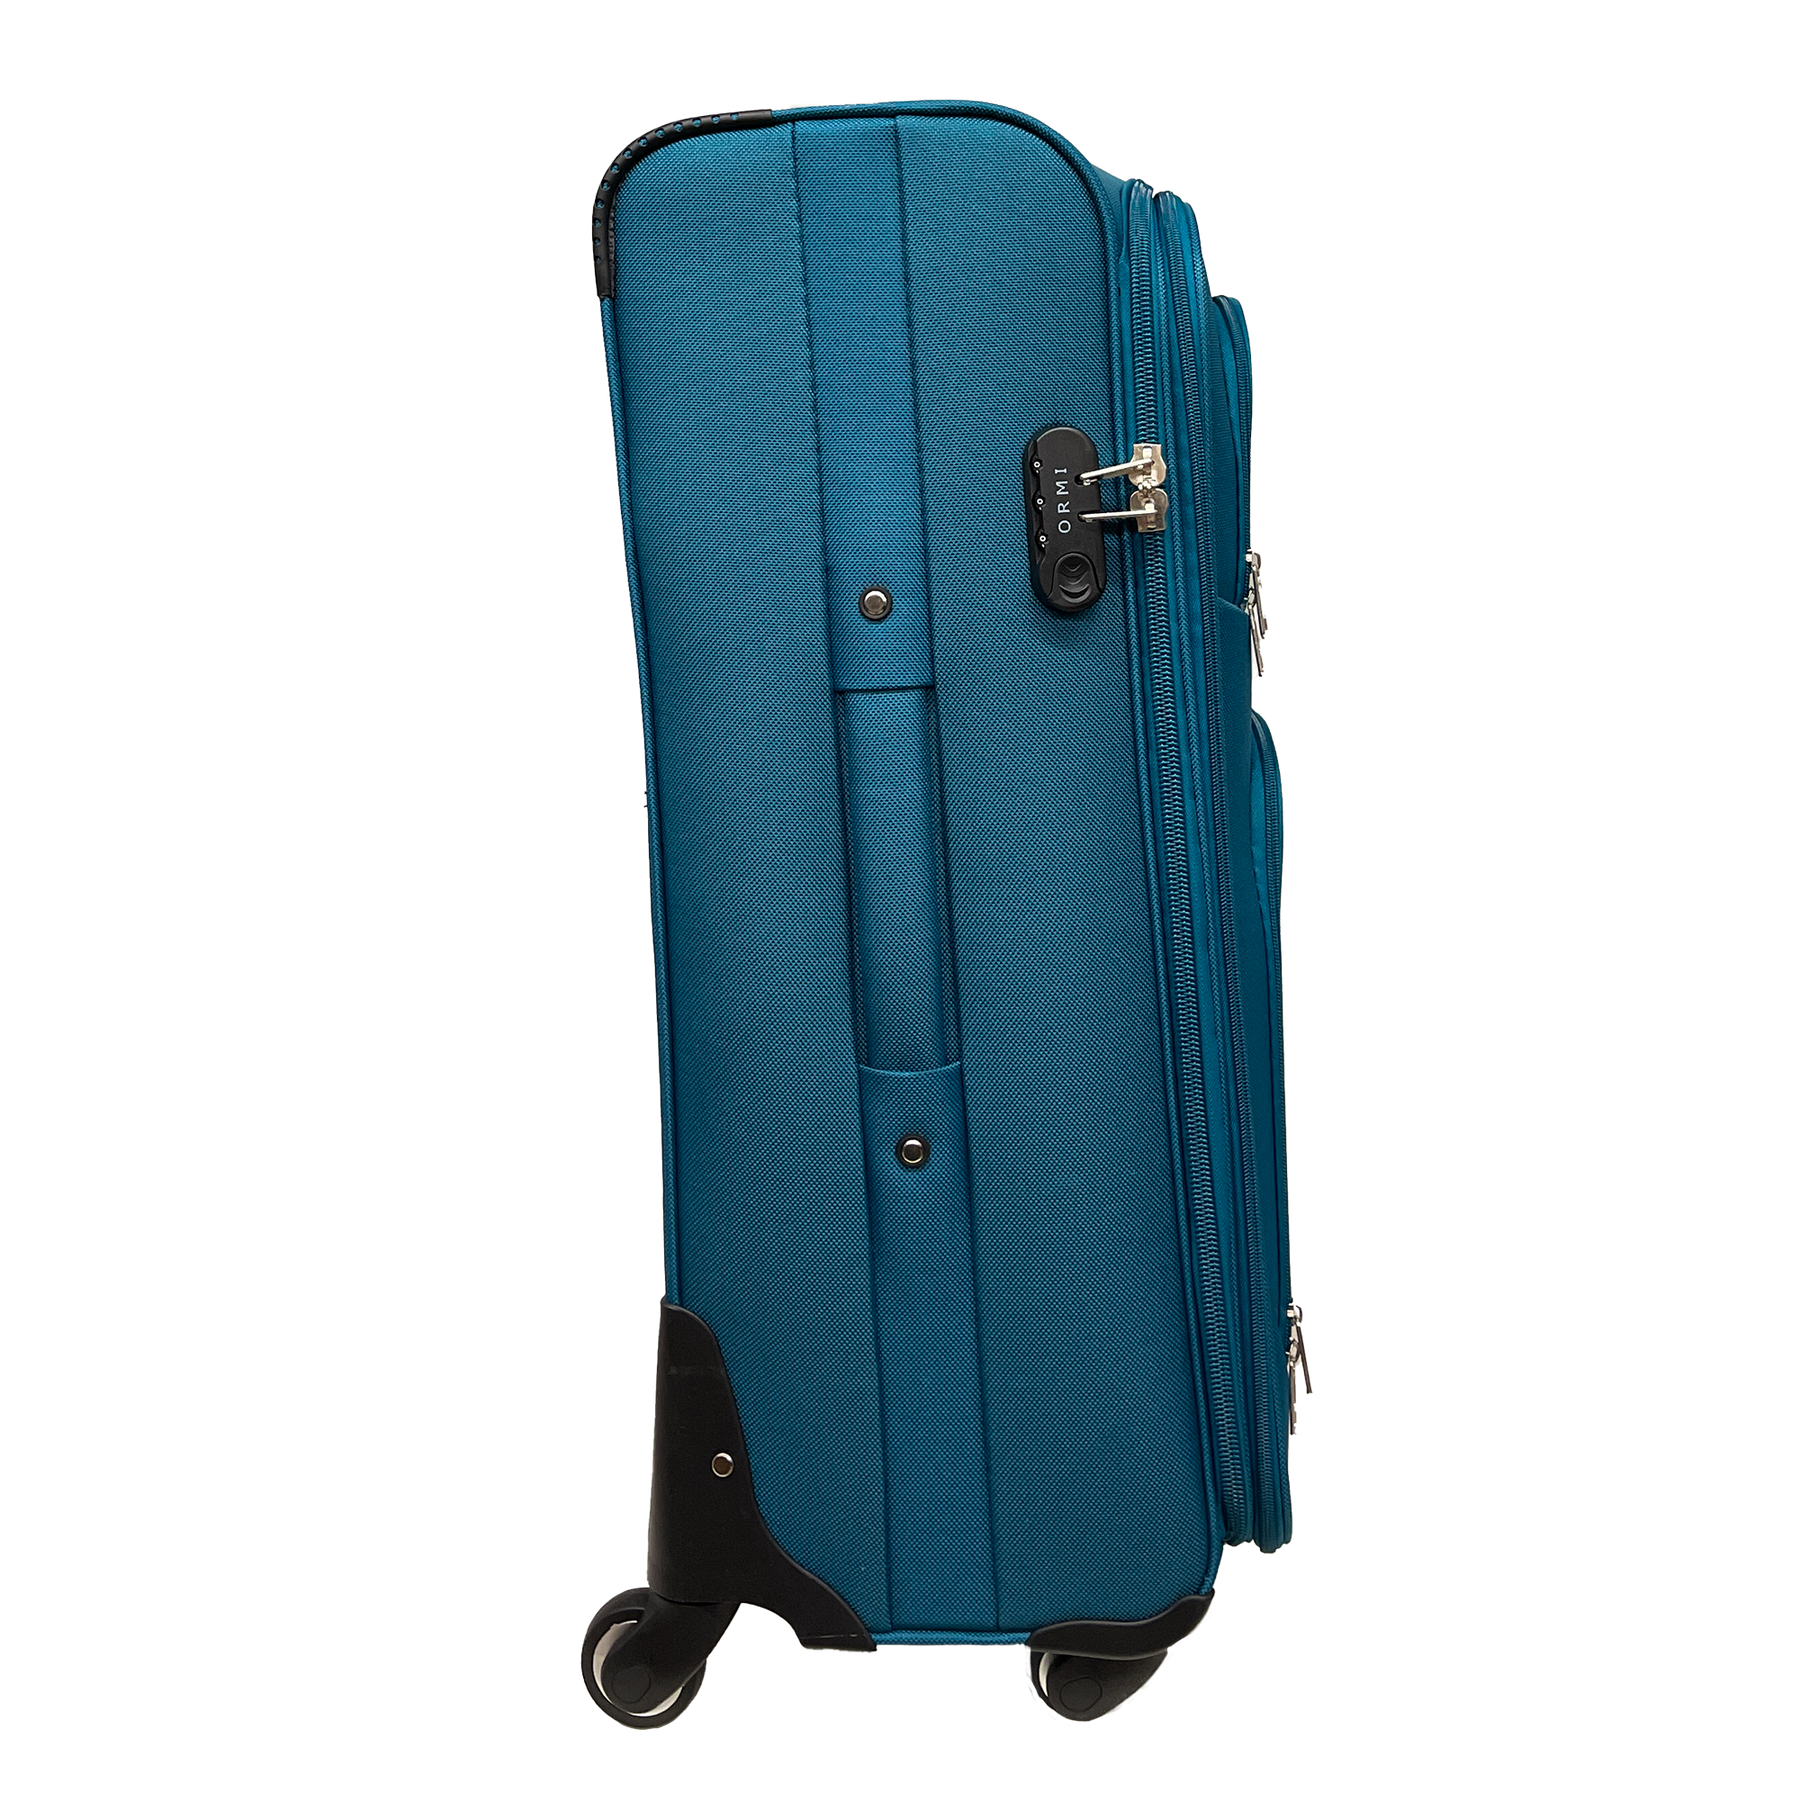 Large expandable semi-rigid suitcase Ormi 75x48x30/35 cm - Shock-resistant and durable fabric